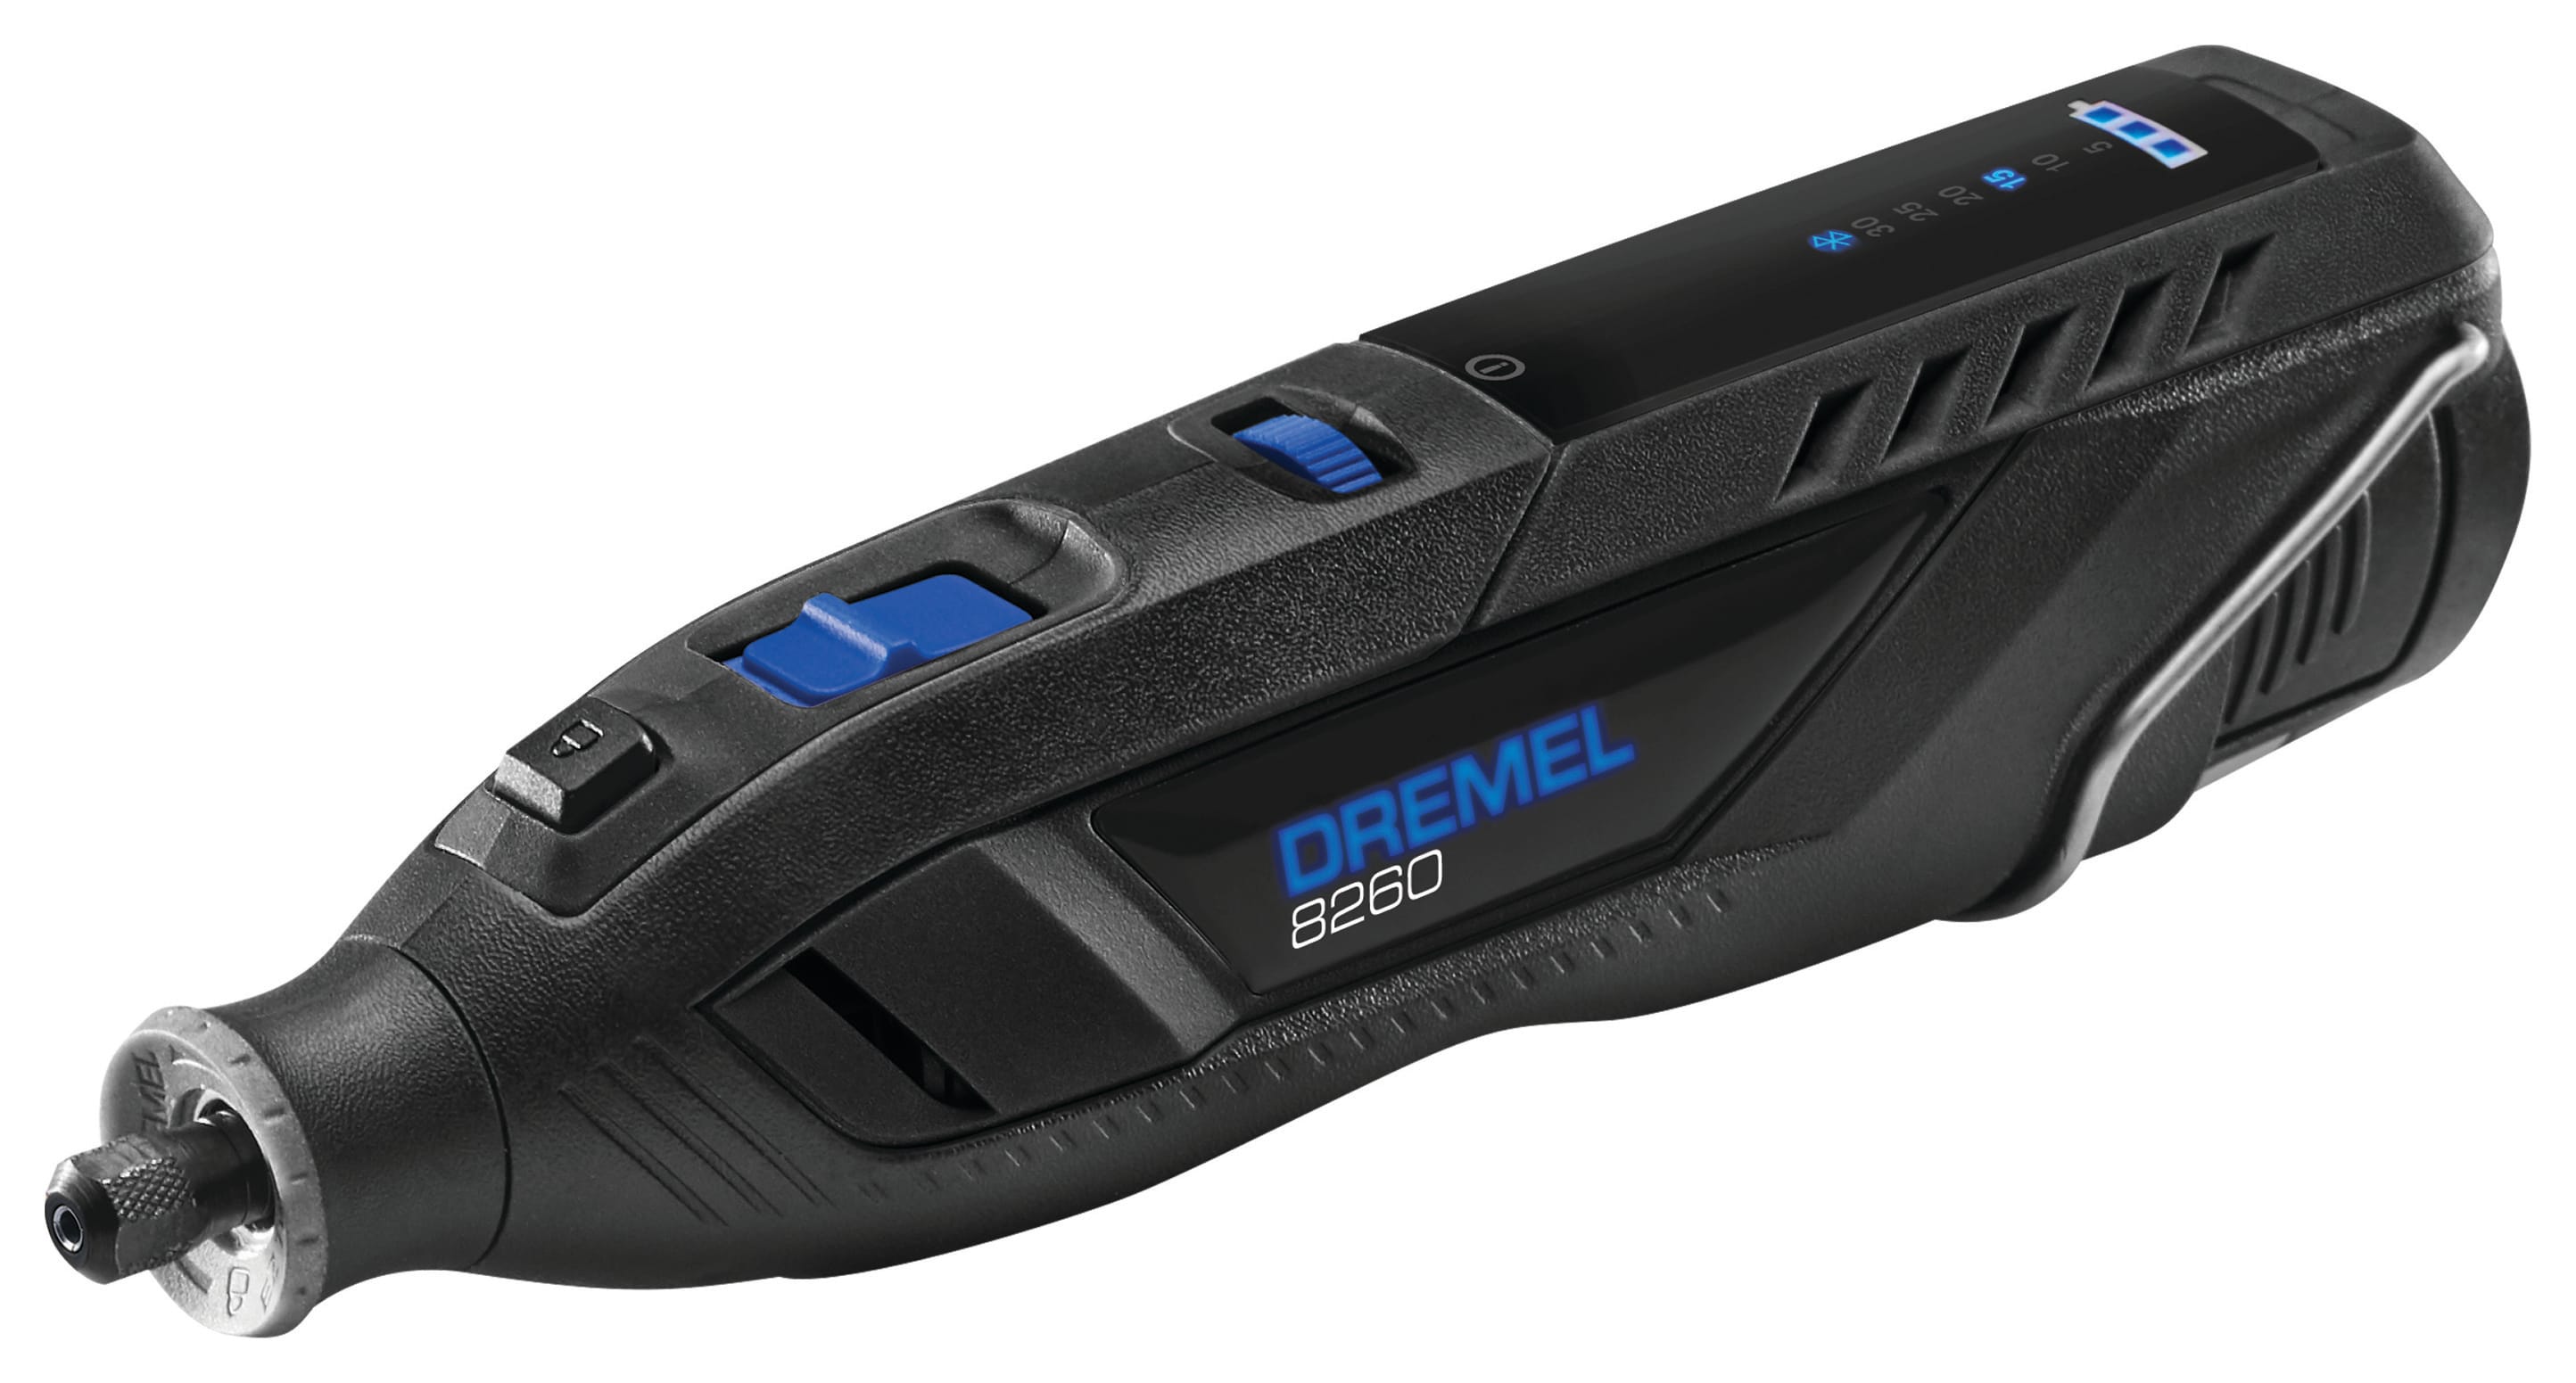 DREMEL® 8260 Cordless Tools